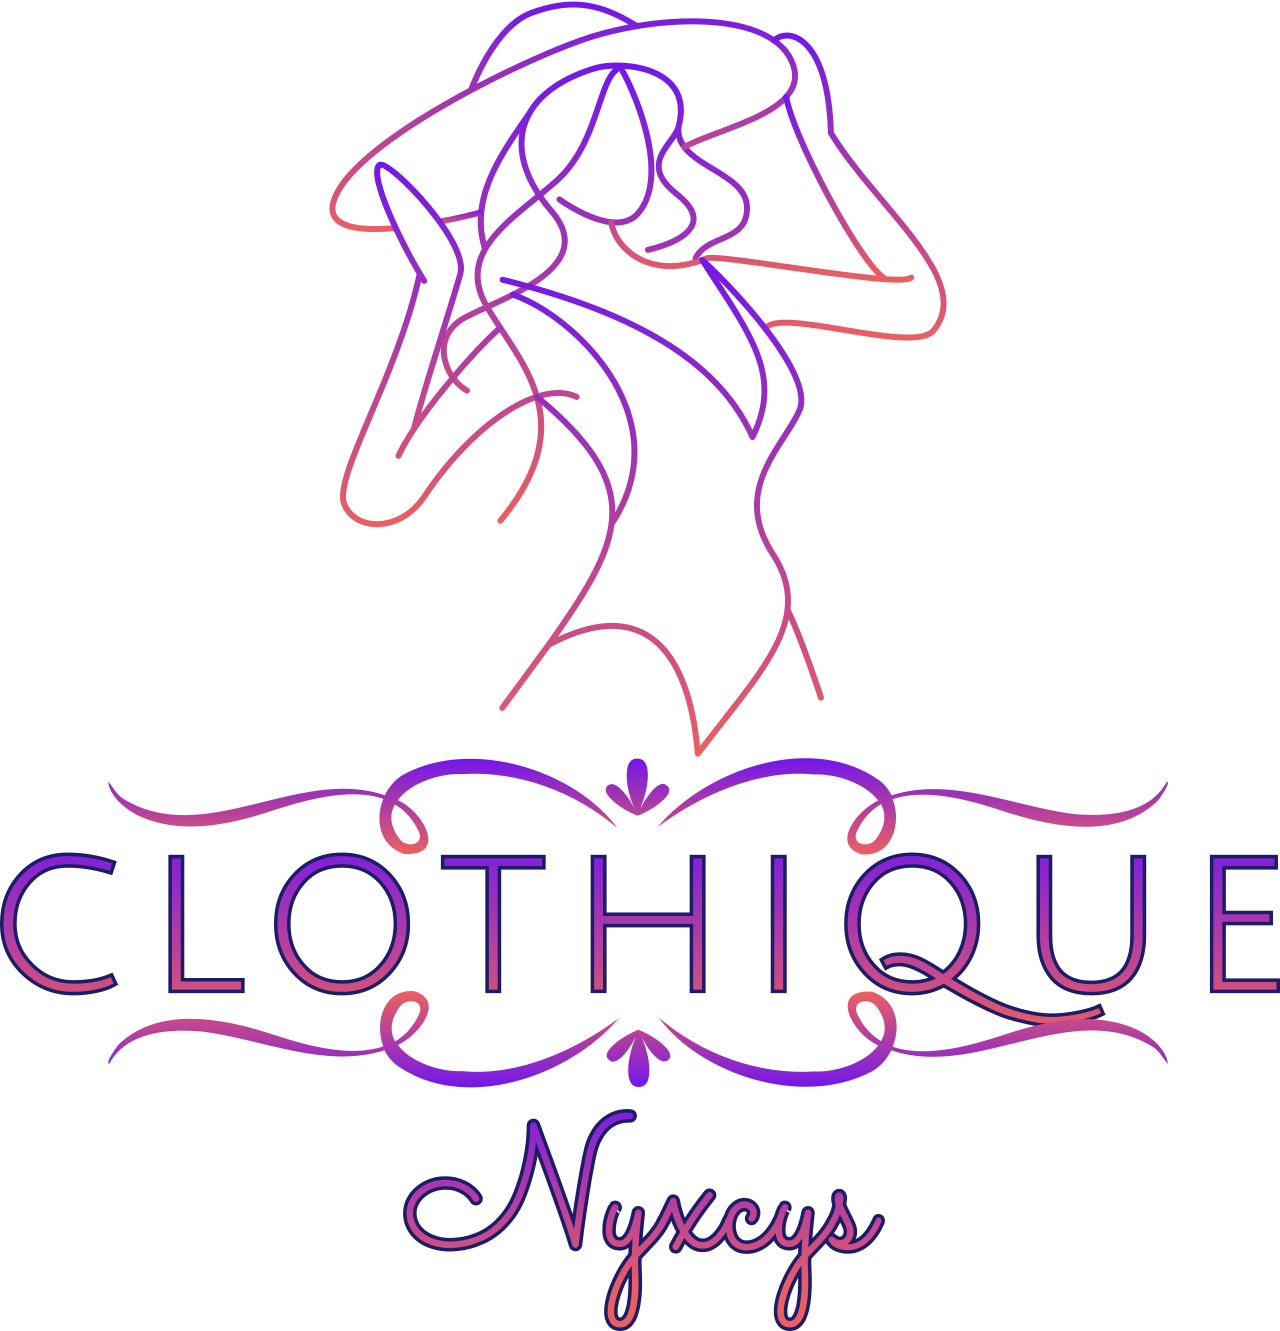 Clothique's logo